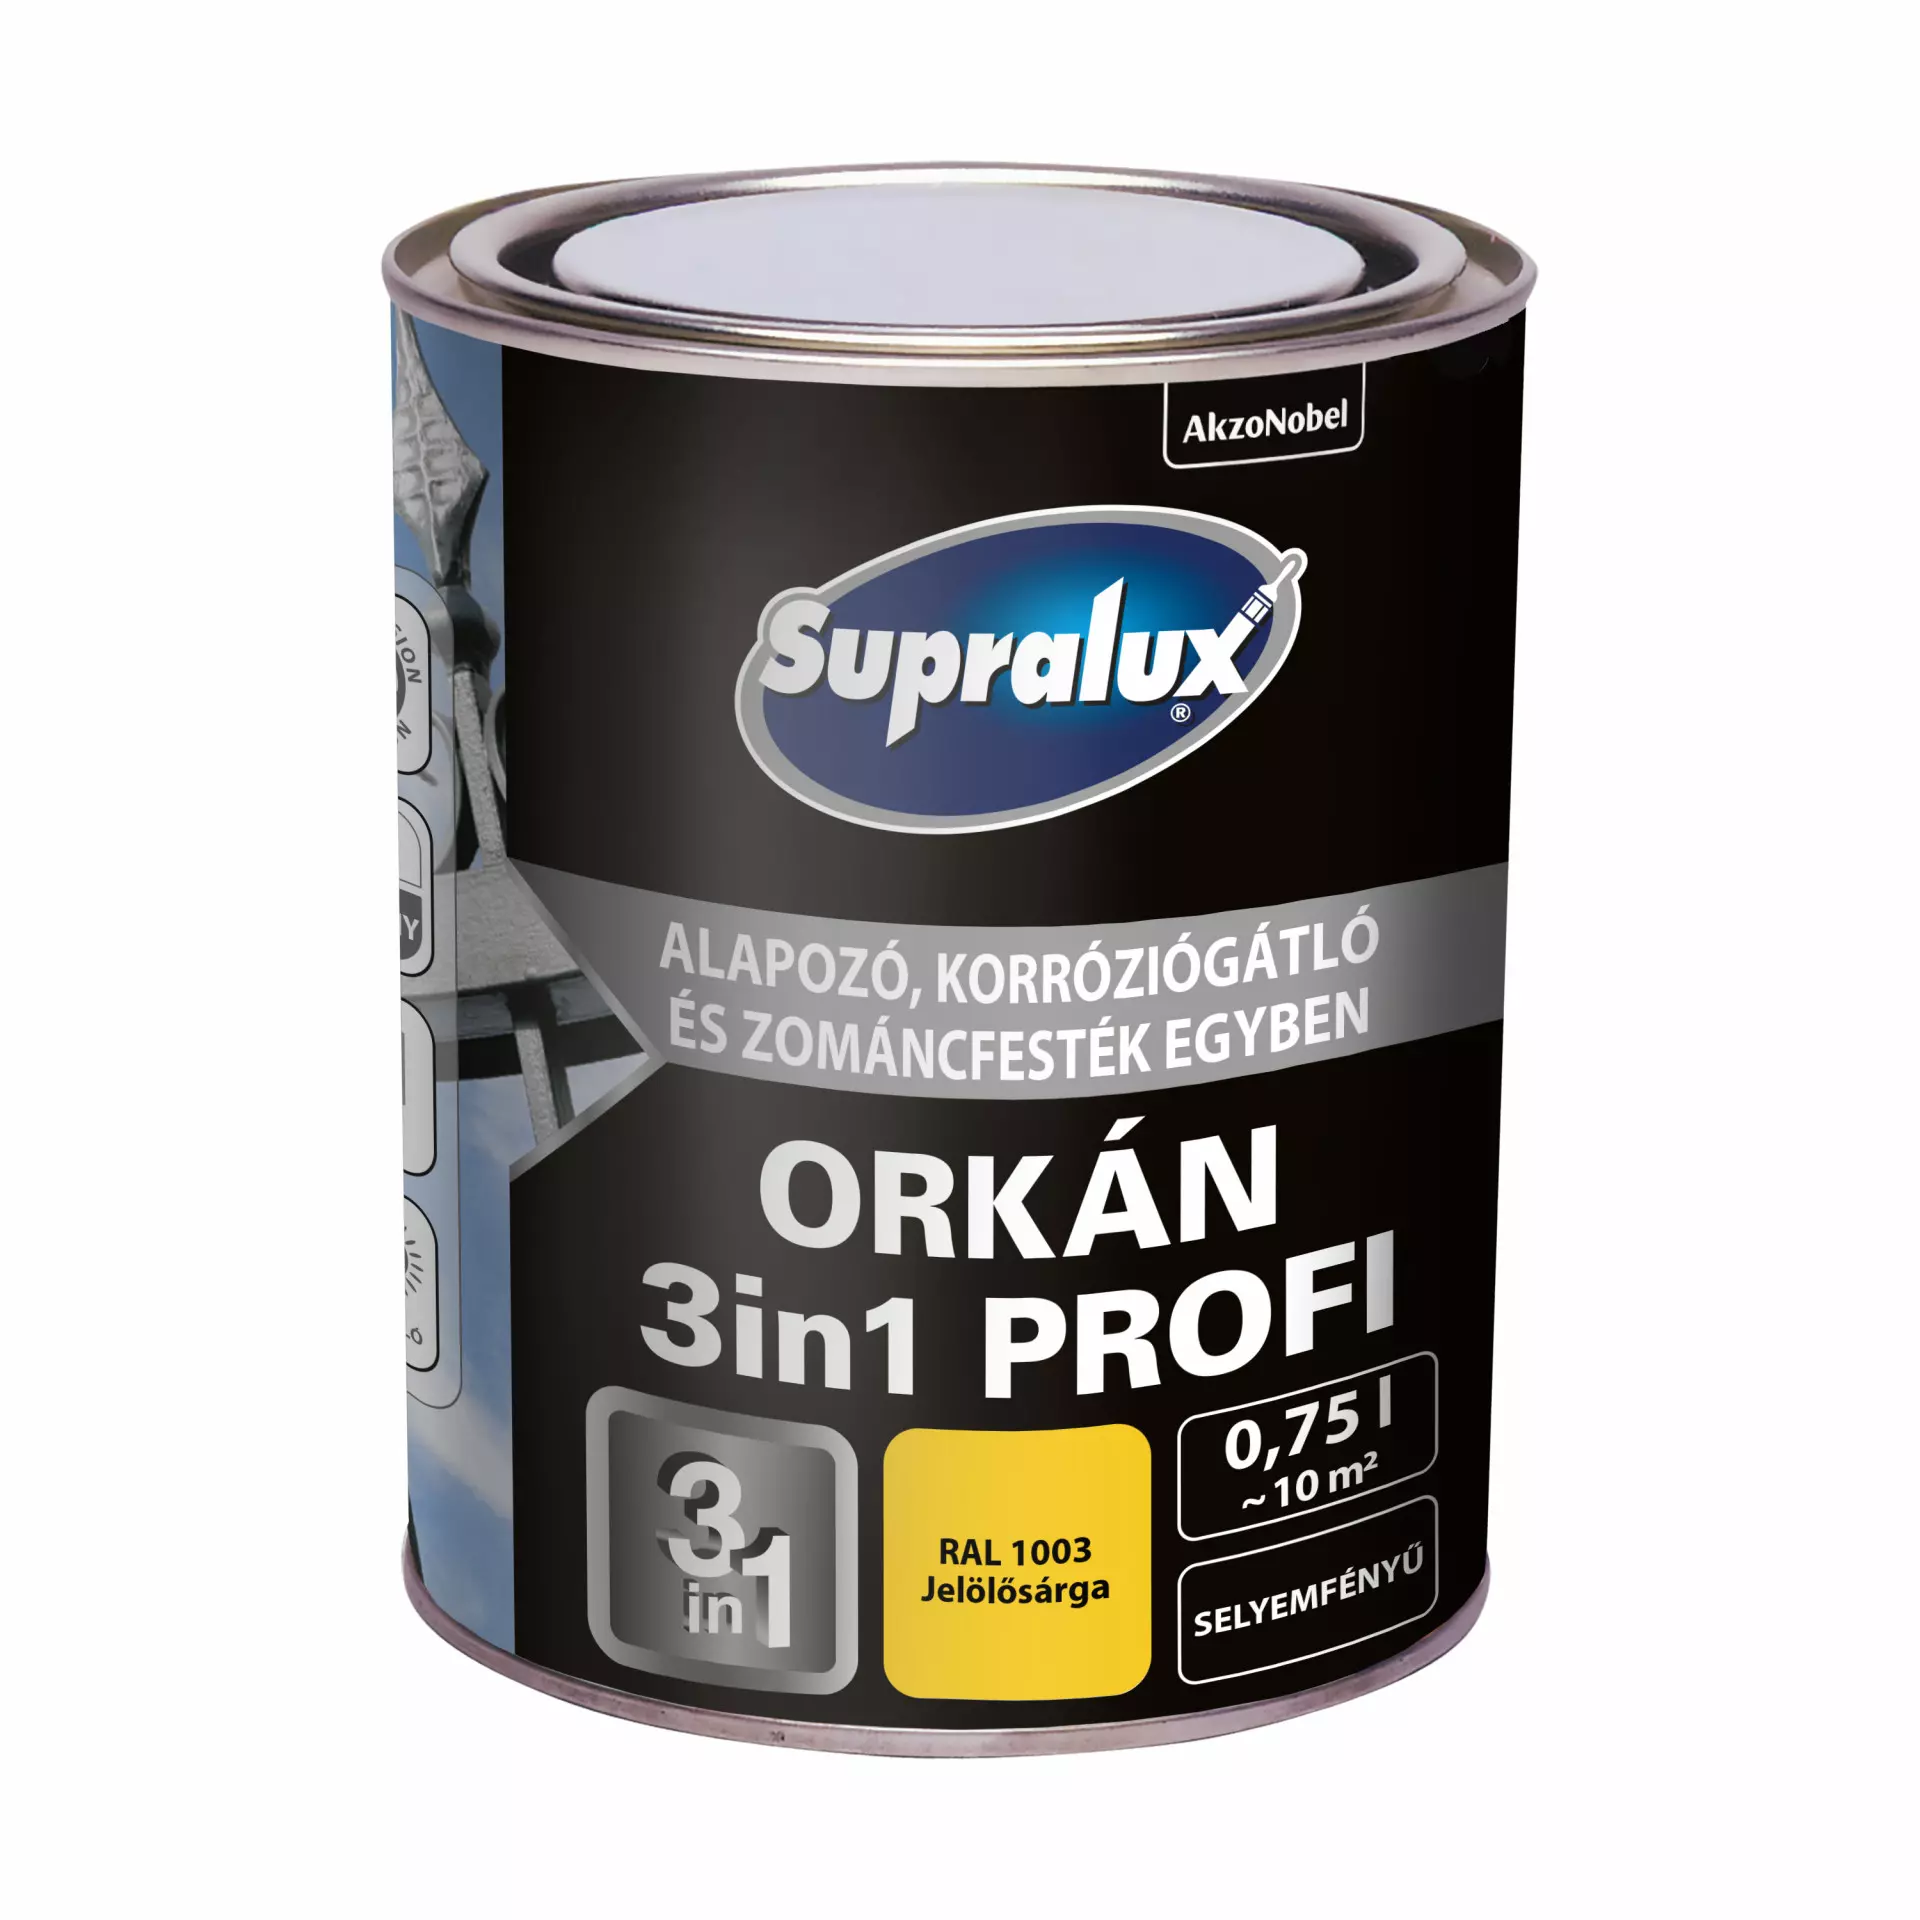 Supralux Orkán 3in1 Profi RAL1003 Jelölősárga 0,75 l